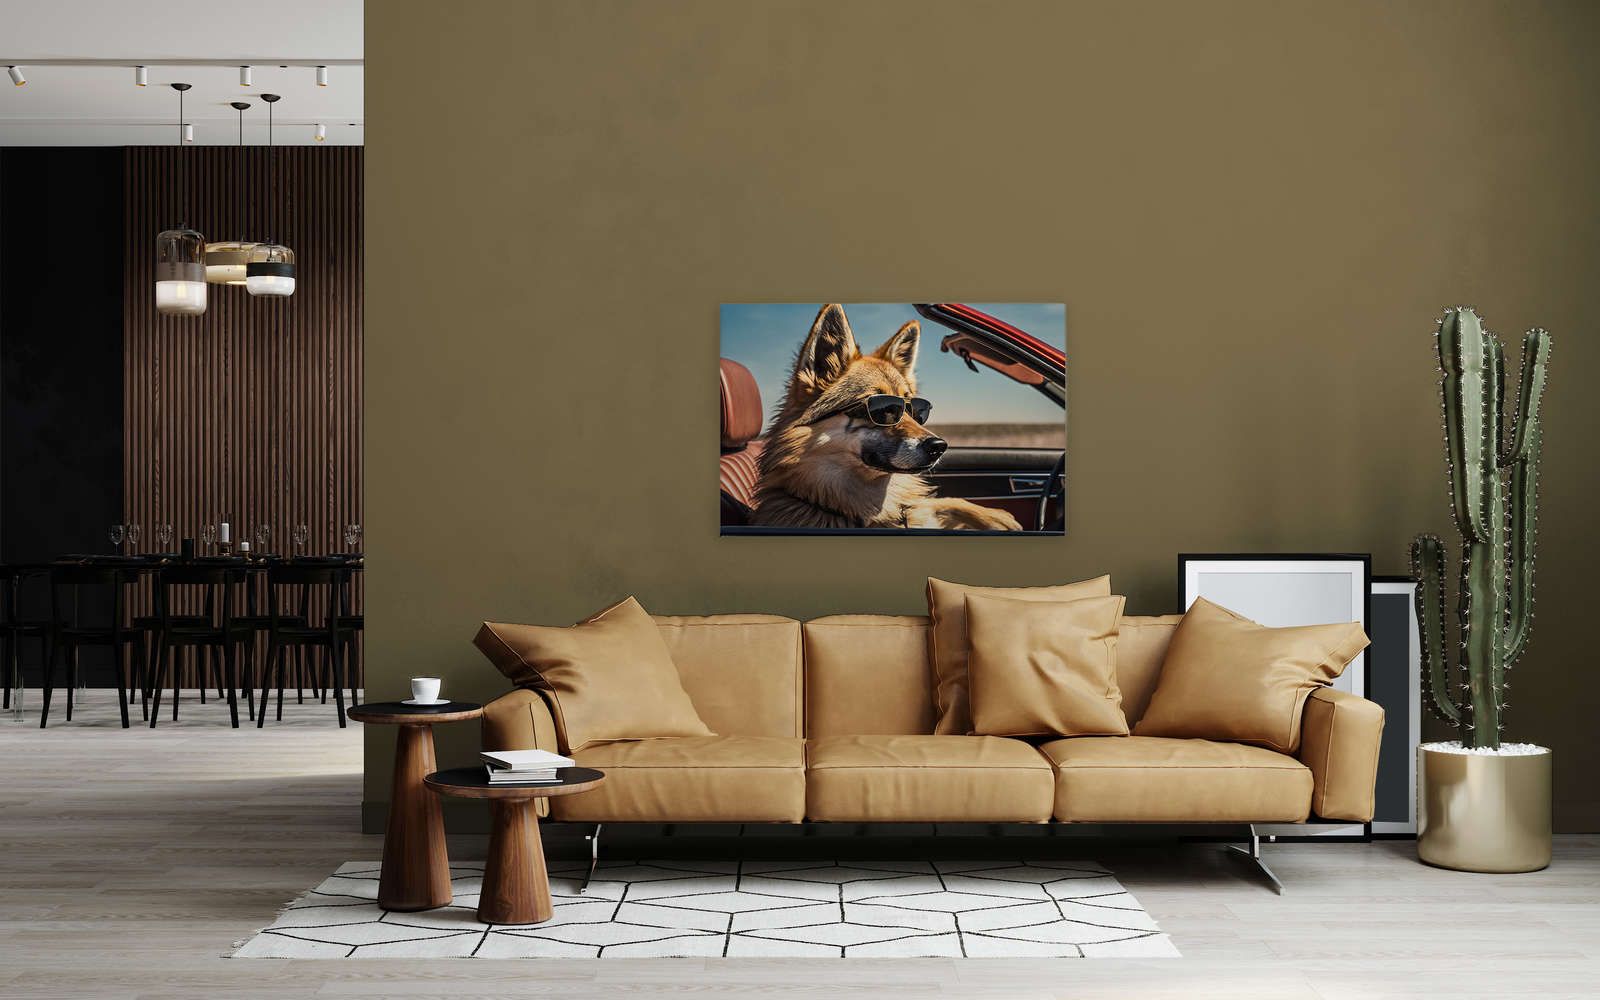             KI-Leinwandbild »crusing wolf« – 120 cm x 80 cm
        